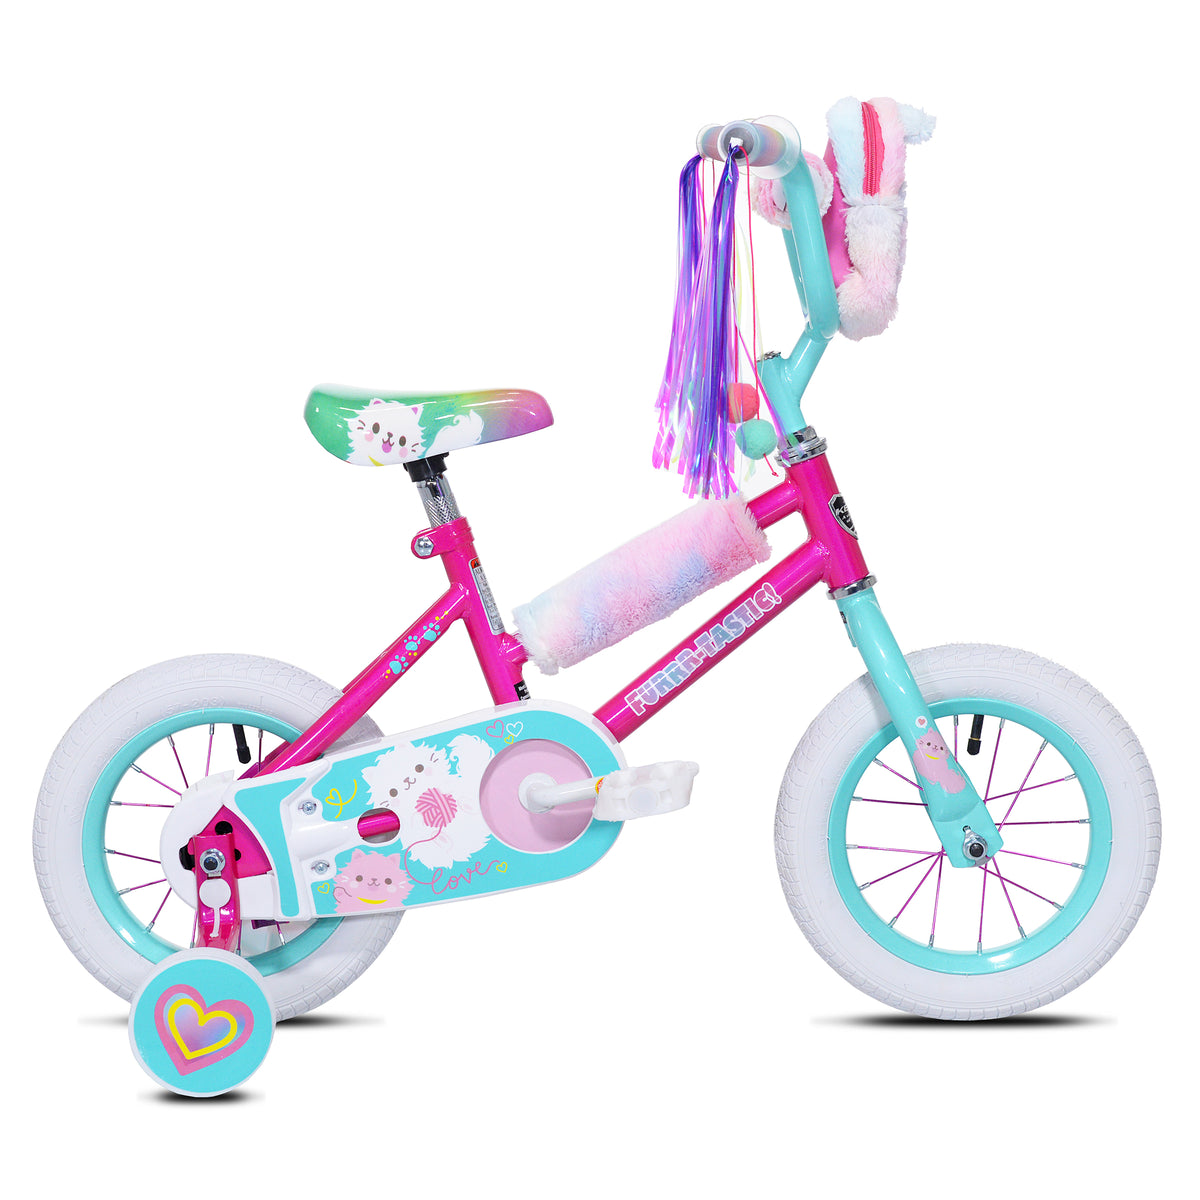 12" Kent Furrrtastic Kitty | Cruiser Bike for Kids Ages 2-4